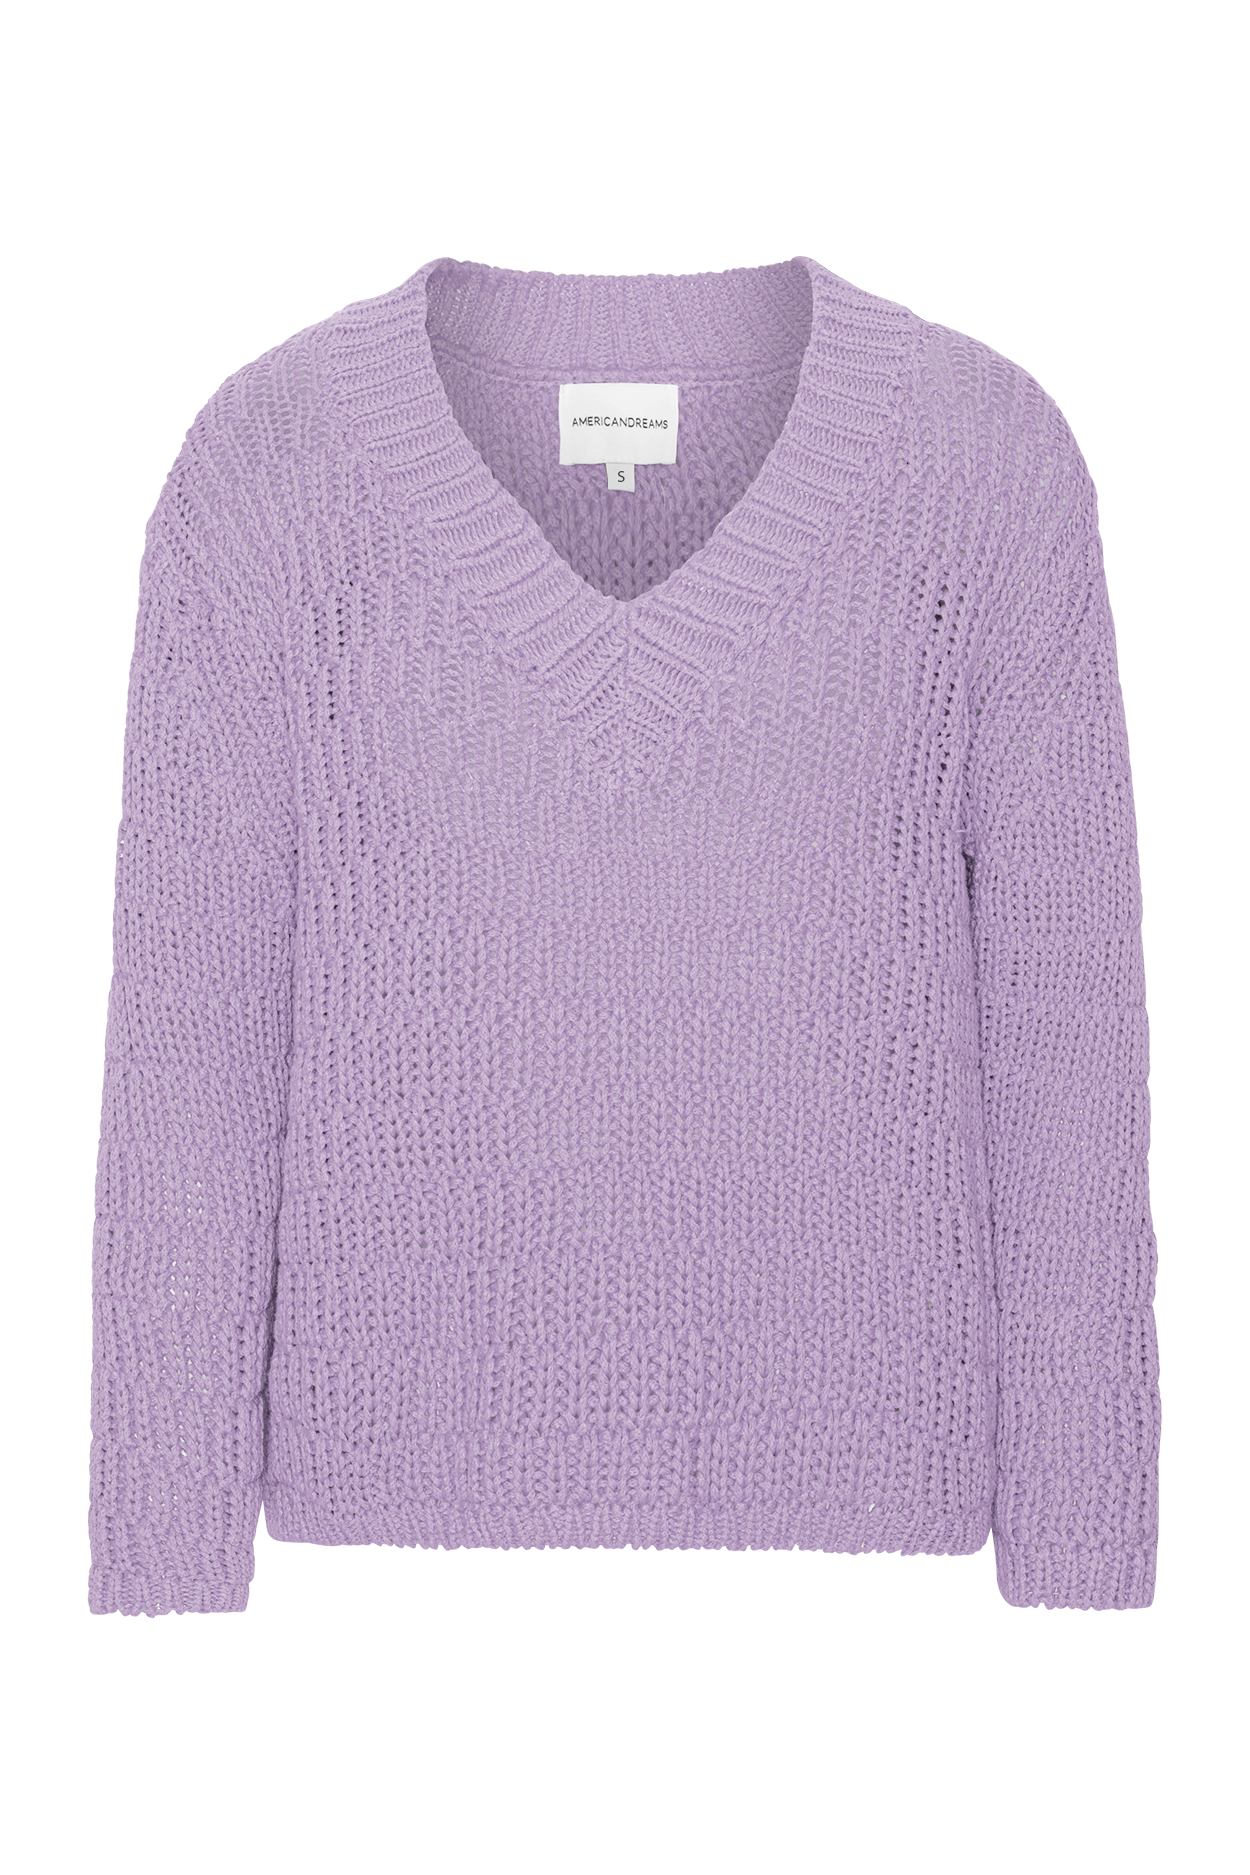 Sui Cotton Pullover Light Purple